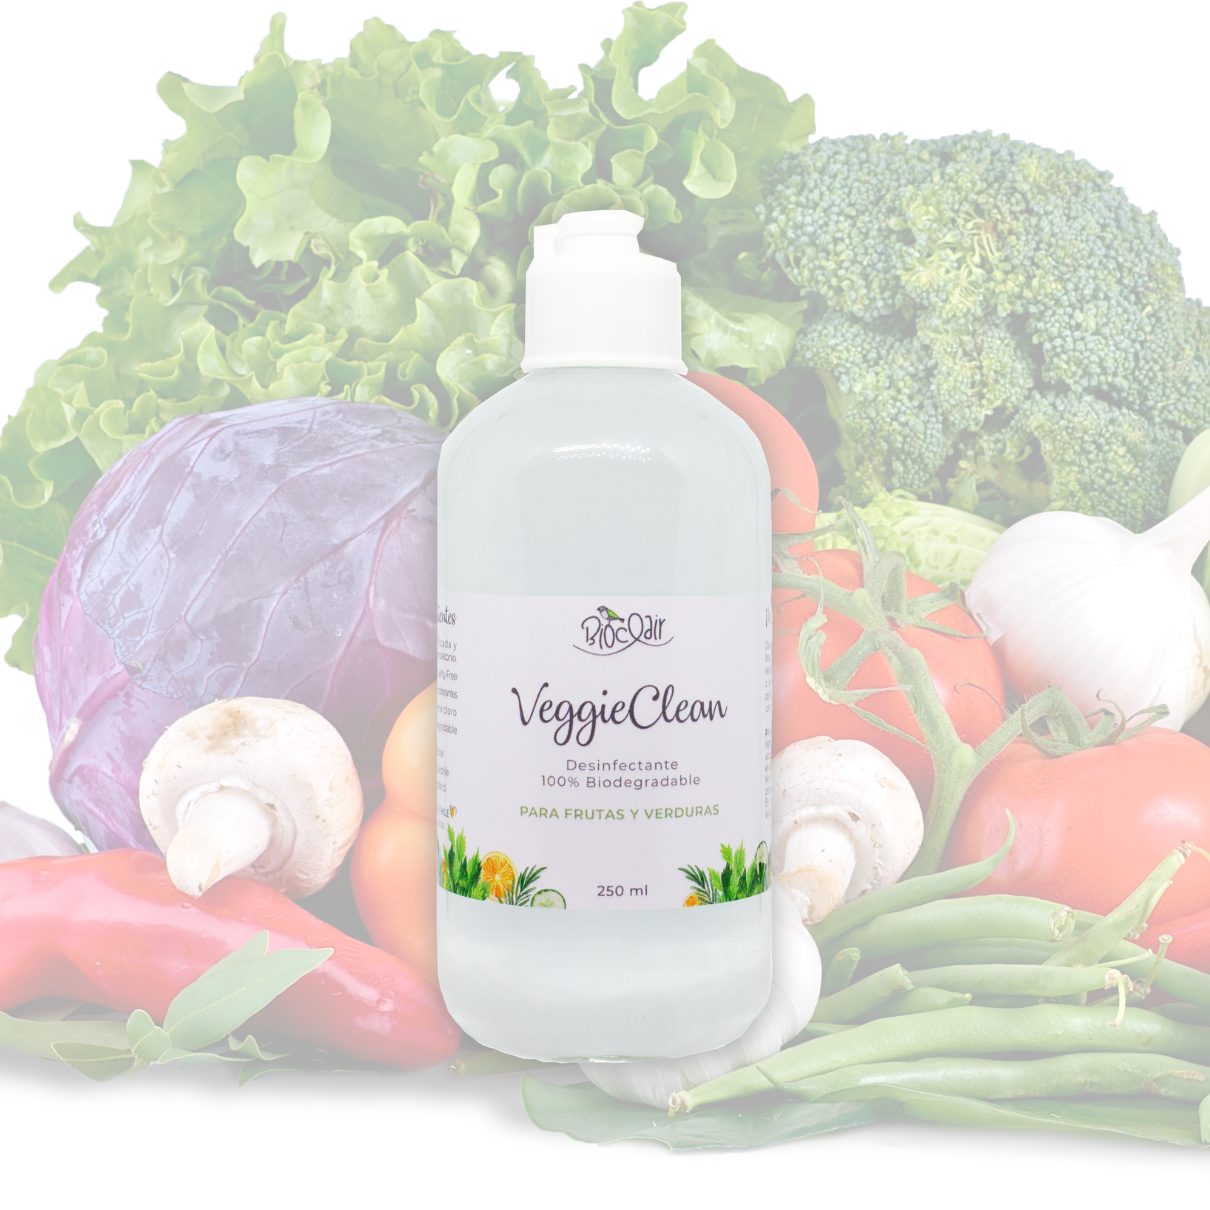 Desinfectante de Verduras, Veggie Clean Biodegradable Bioclair 250 ml